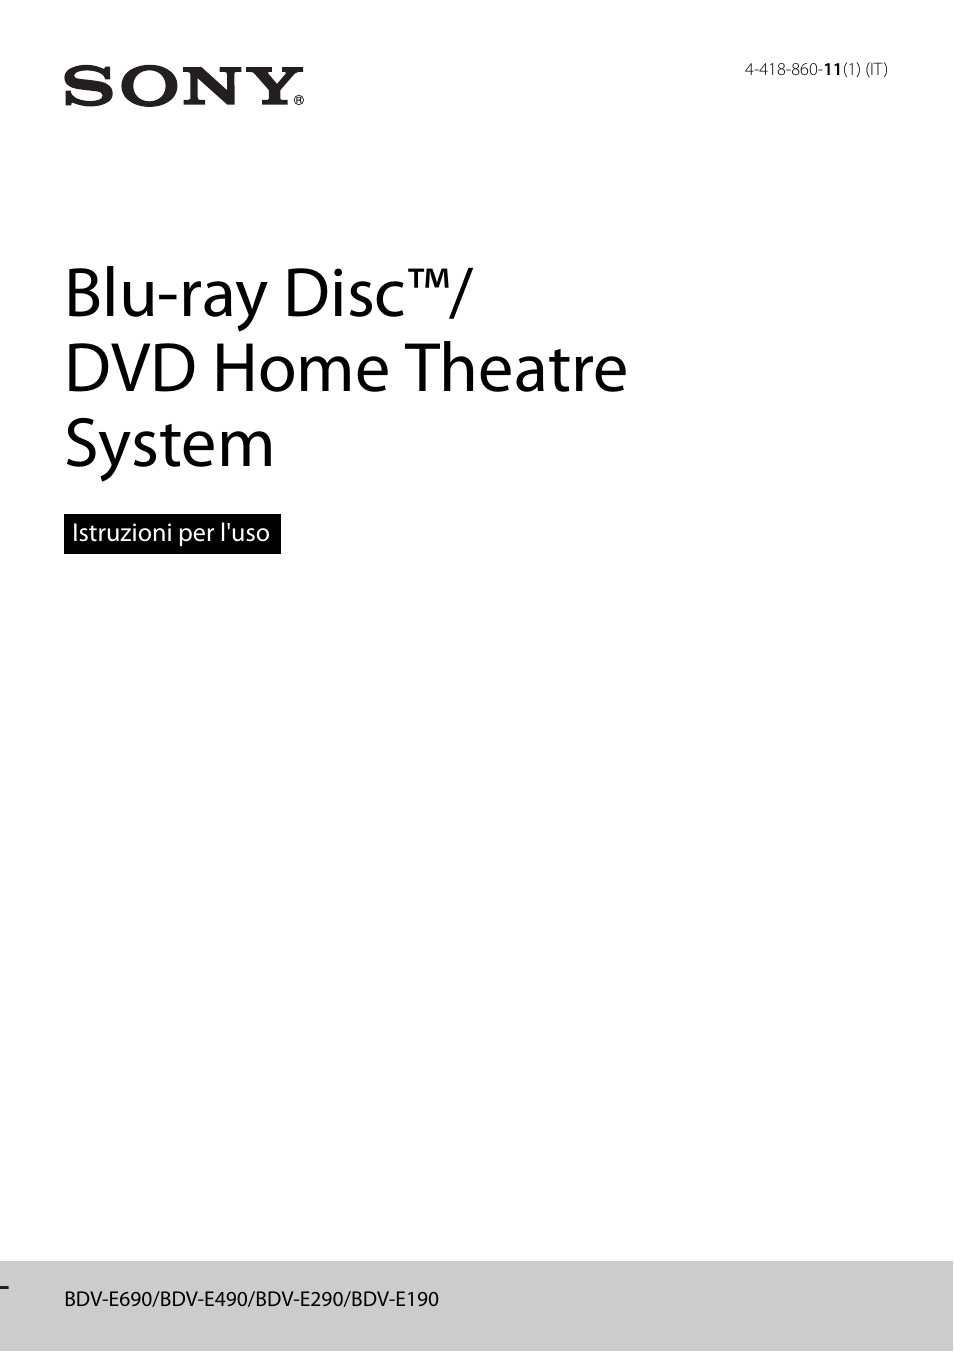 Sony BDV-E190 Manuale d'uso | Pagine: 60